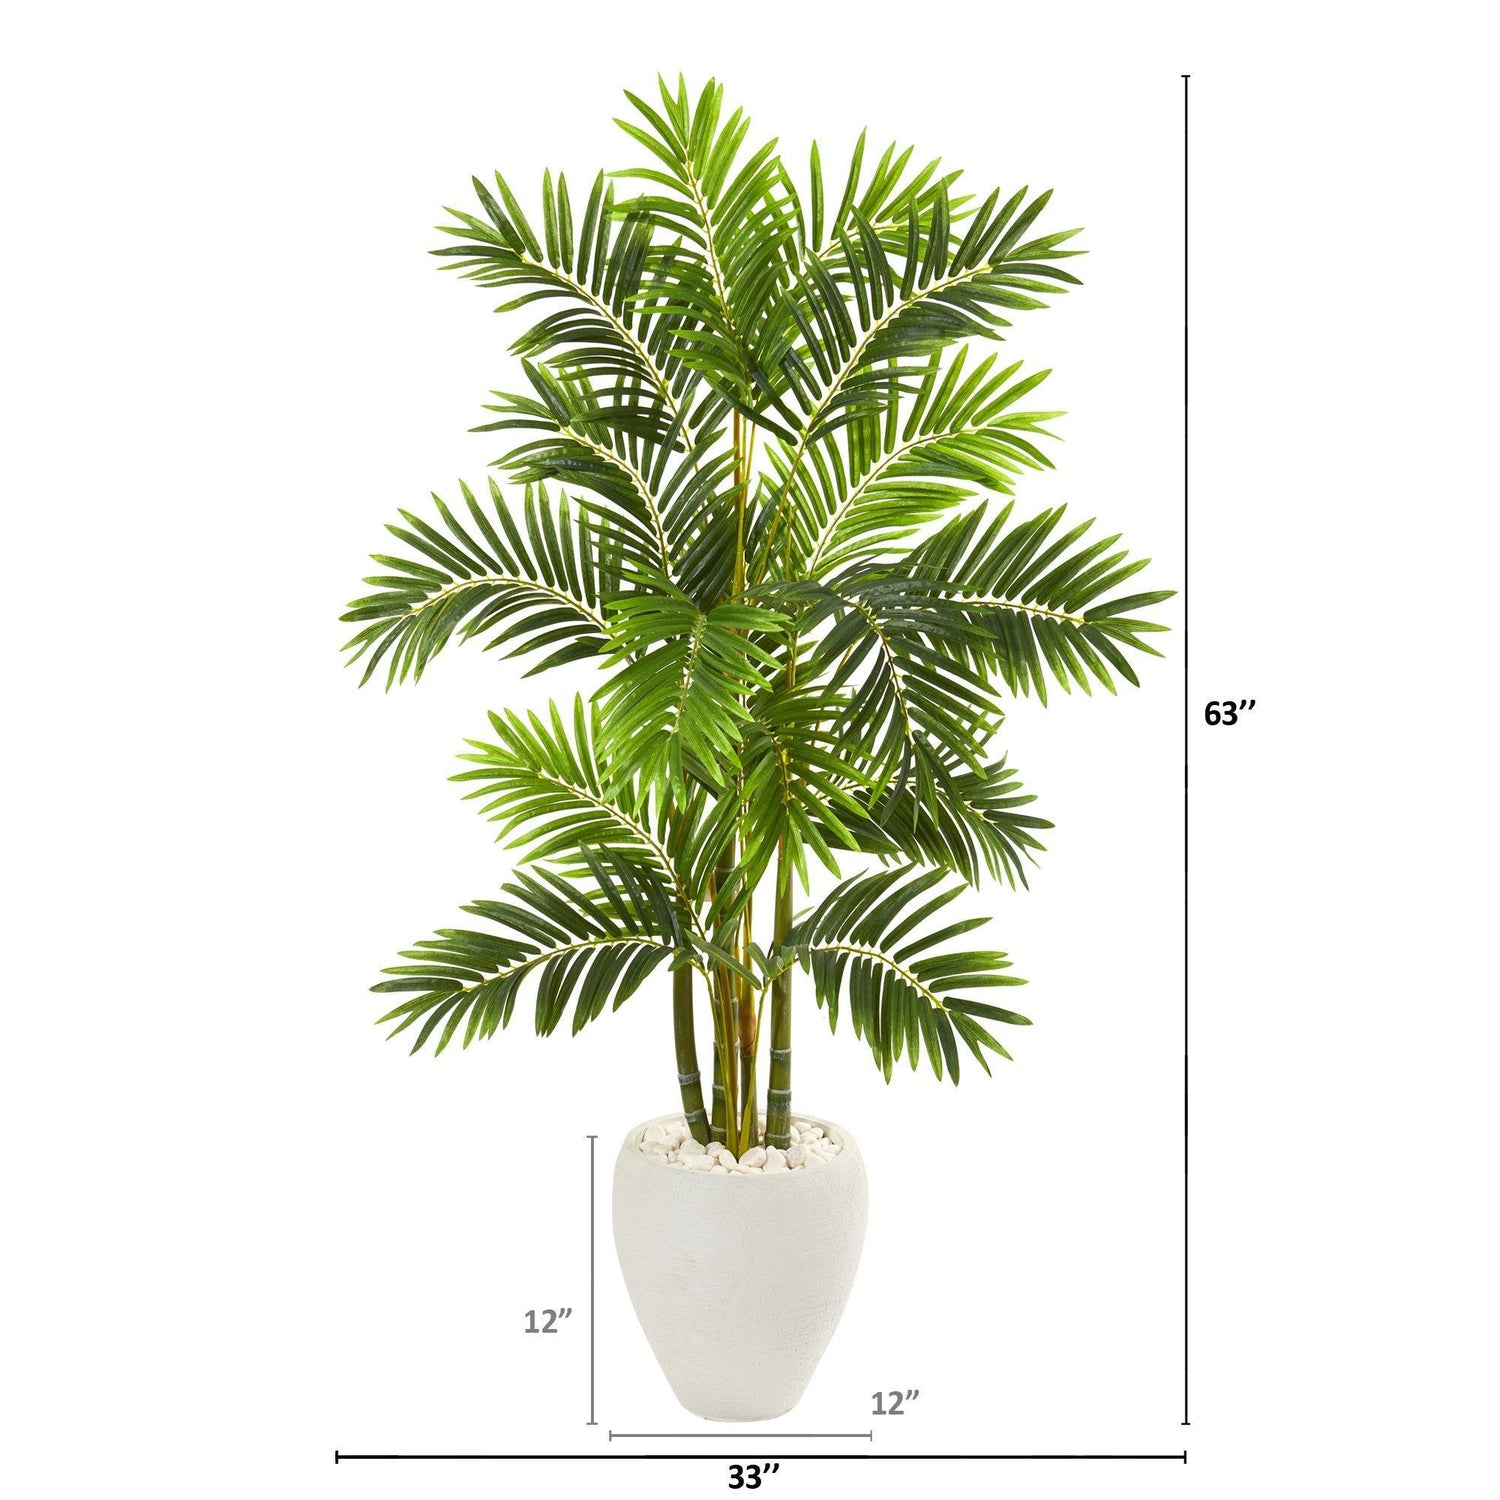 63” Areca Palm Artificial Tree in White Planter